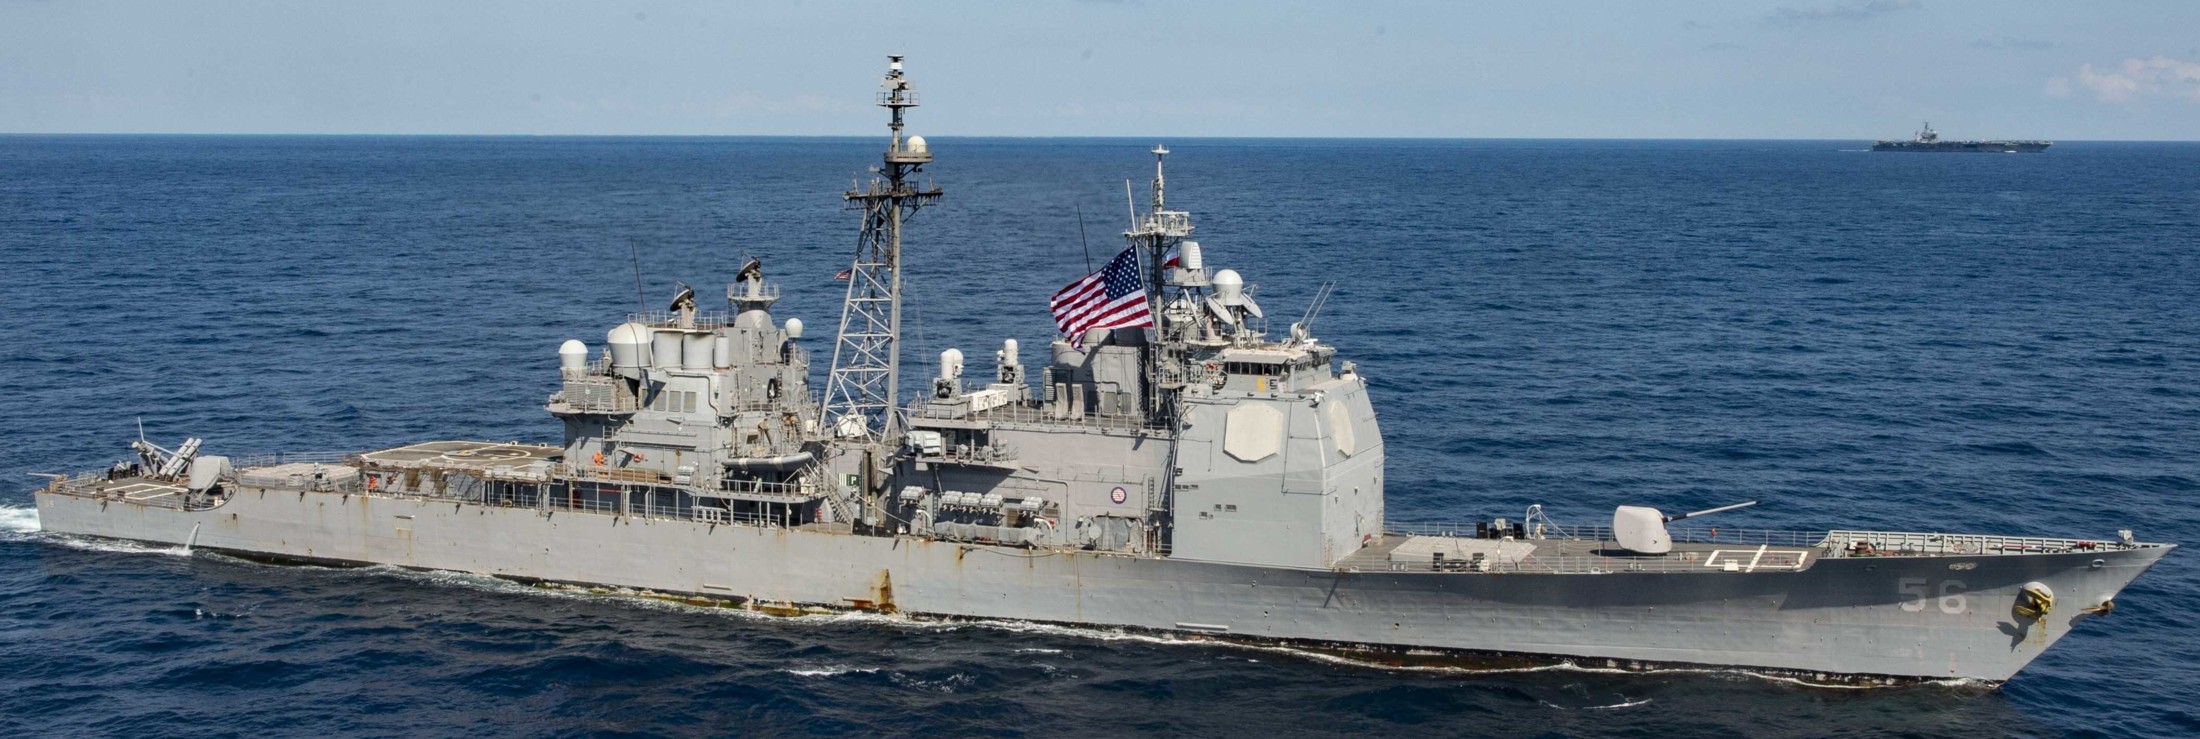 cg-56 uss san jacinto ticonderoga class guided missile cruiser aegis us navy atlantic ocean 114